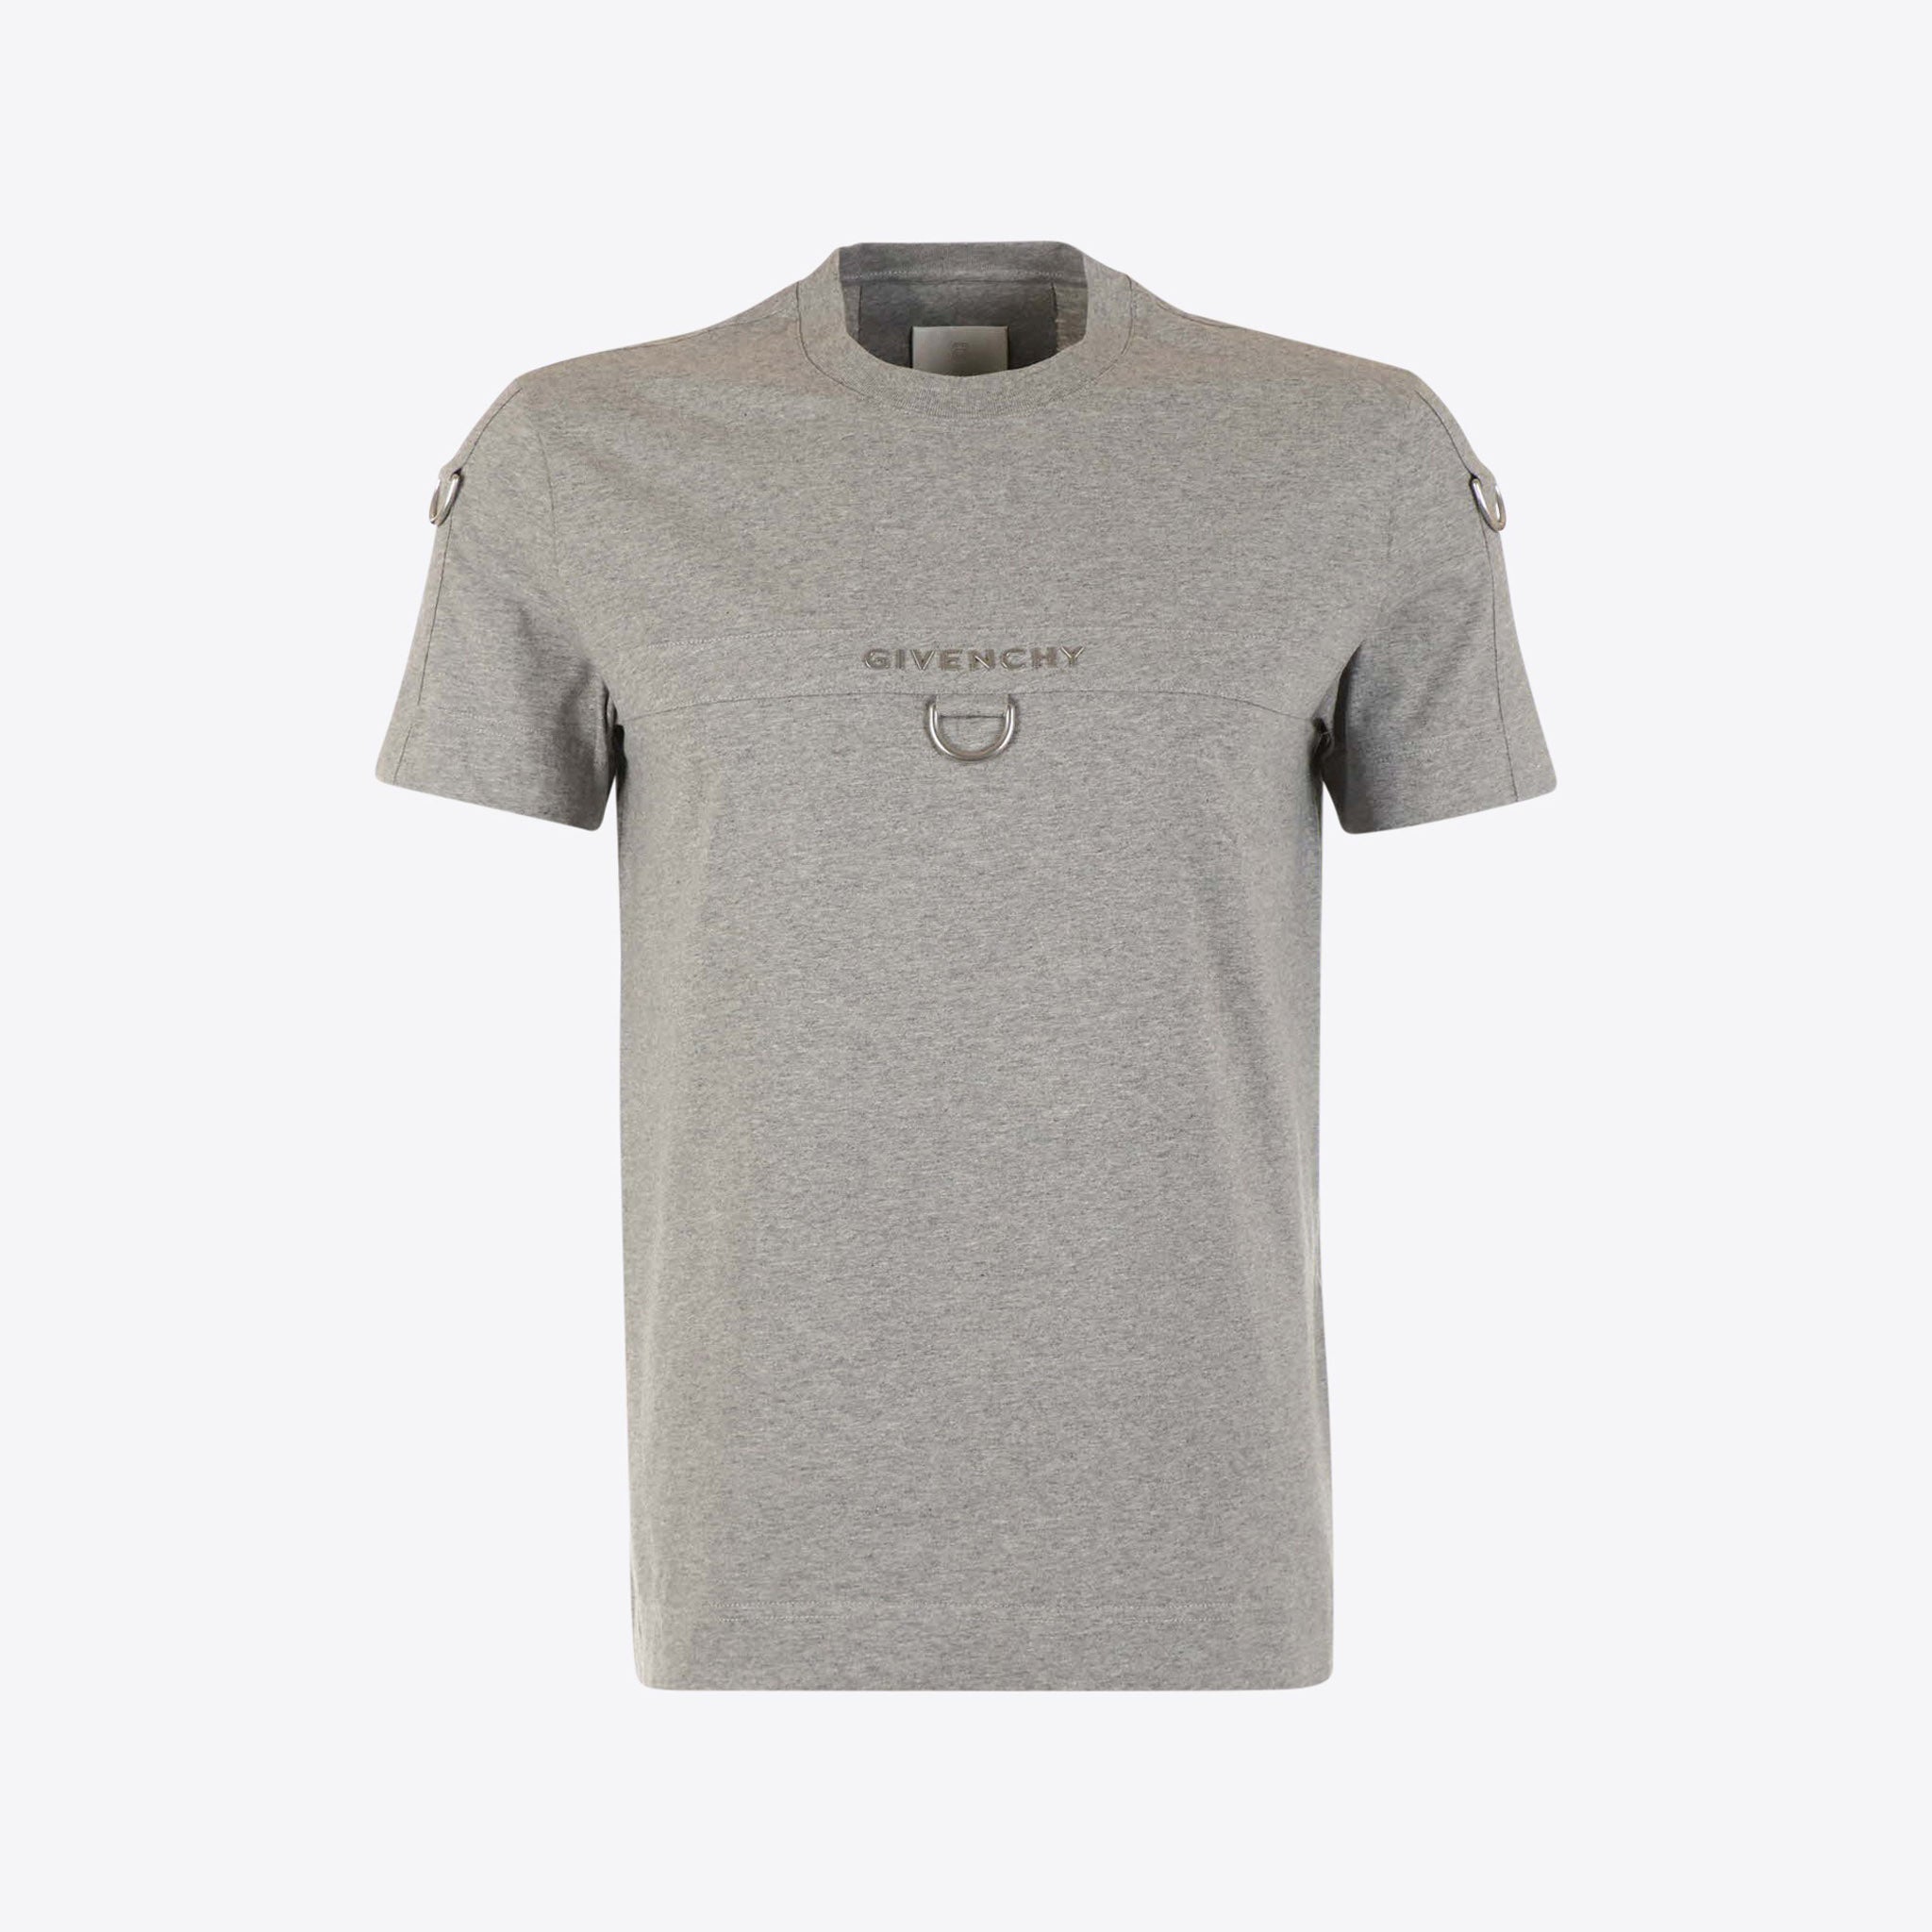 Givenchy T-shirt Grijs